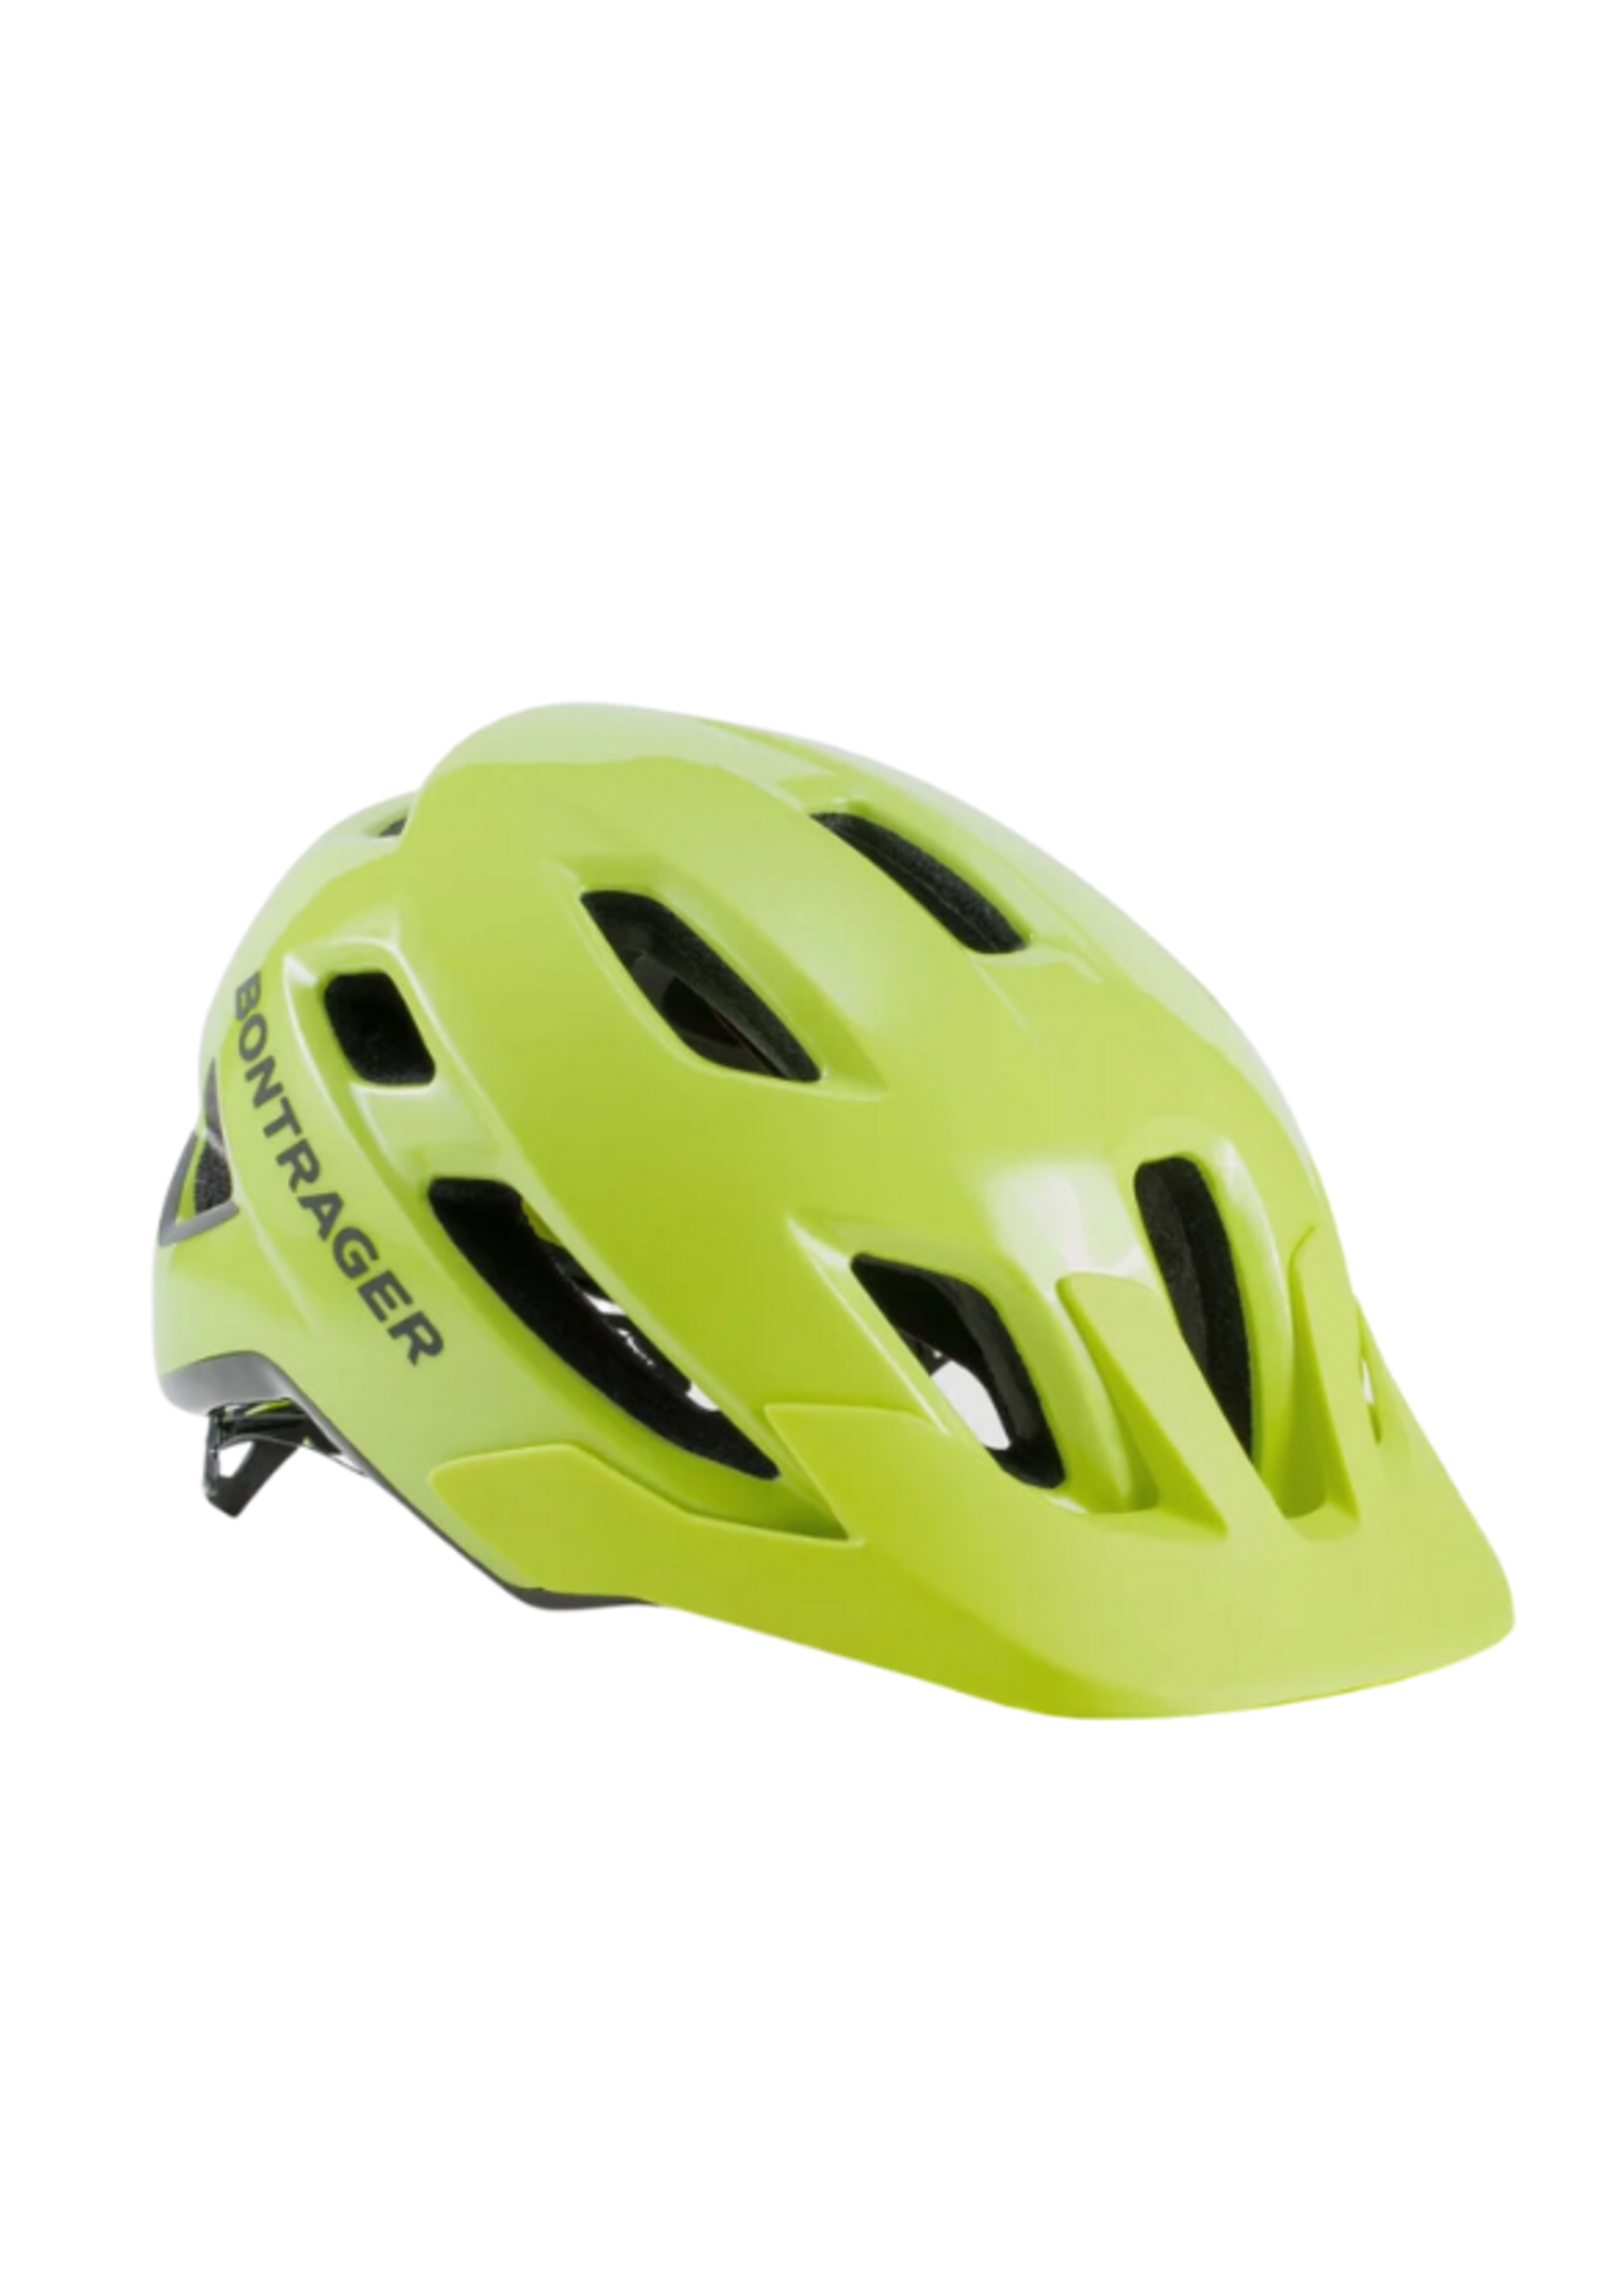 Bontager Bontrager Quantum Mips Bike Helmet